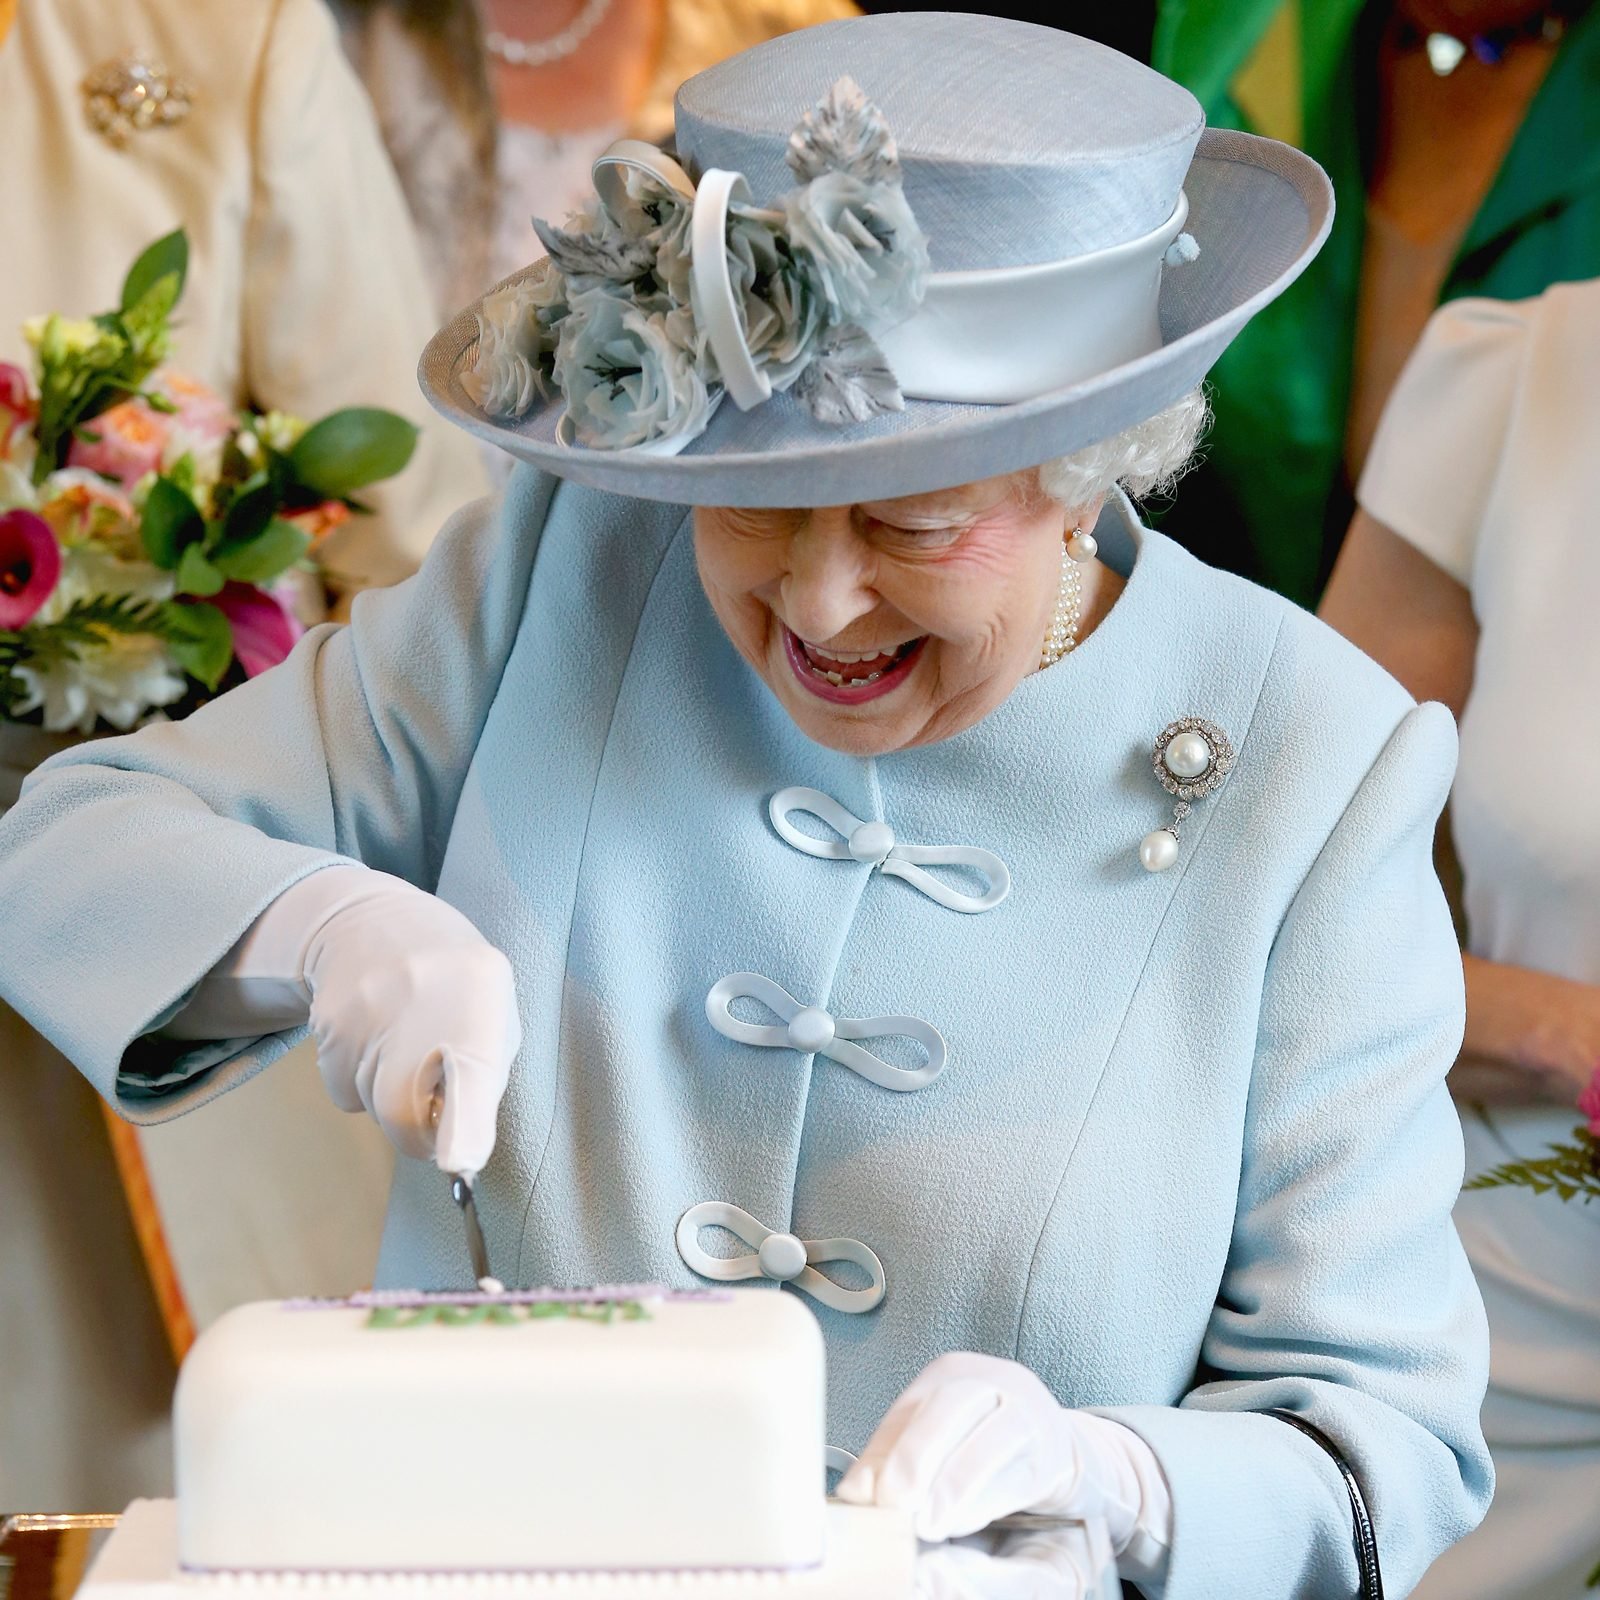 Why Did Queen Elizabeth Have Two Birthdays?